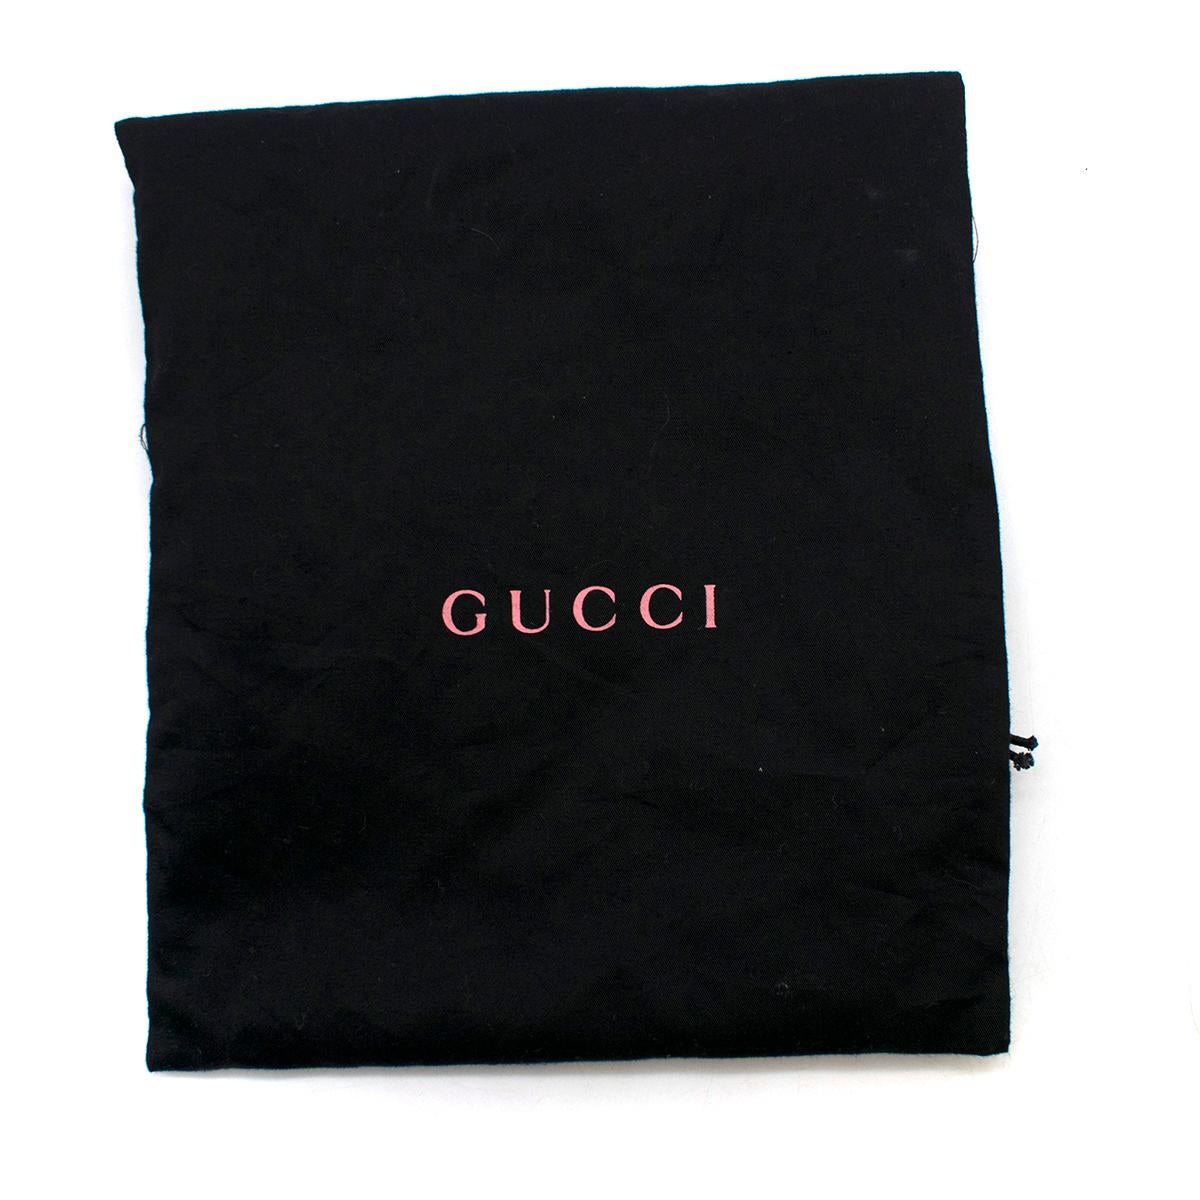 Gucci Zebra Leather Pumps 5.5  For Sale 2